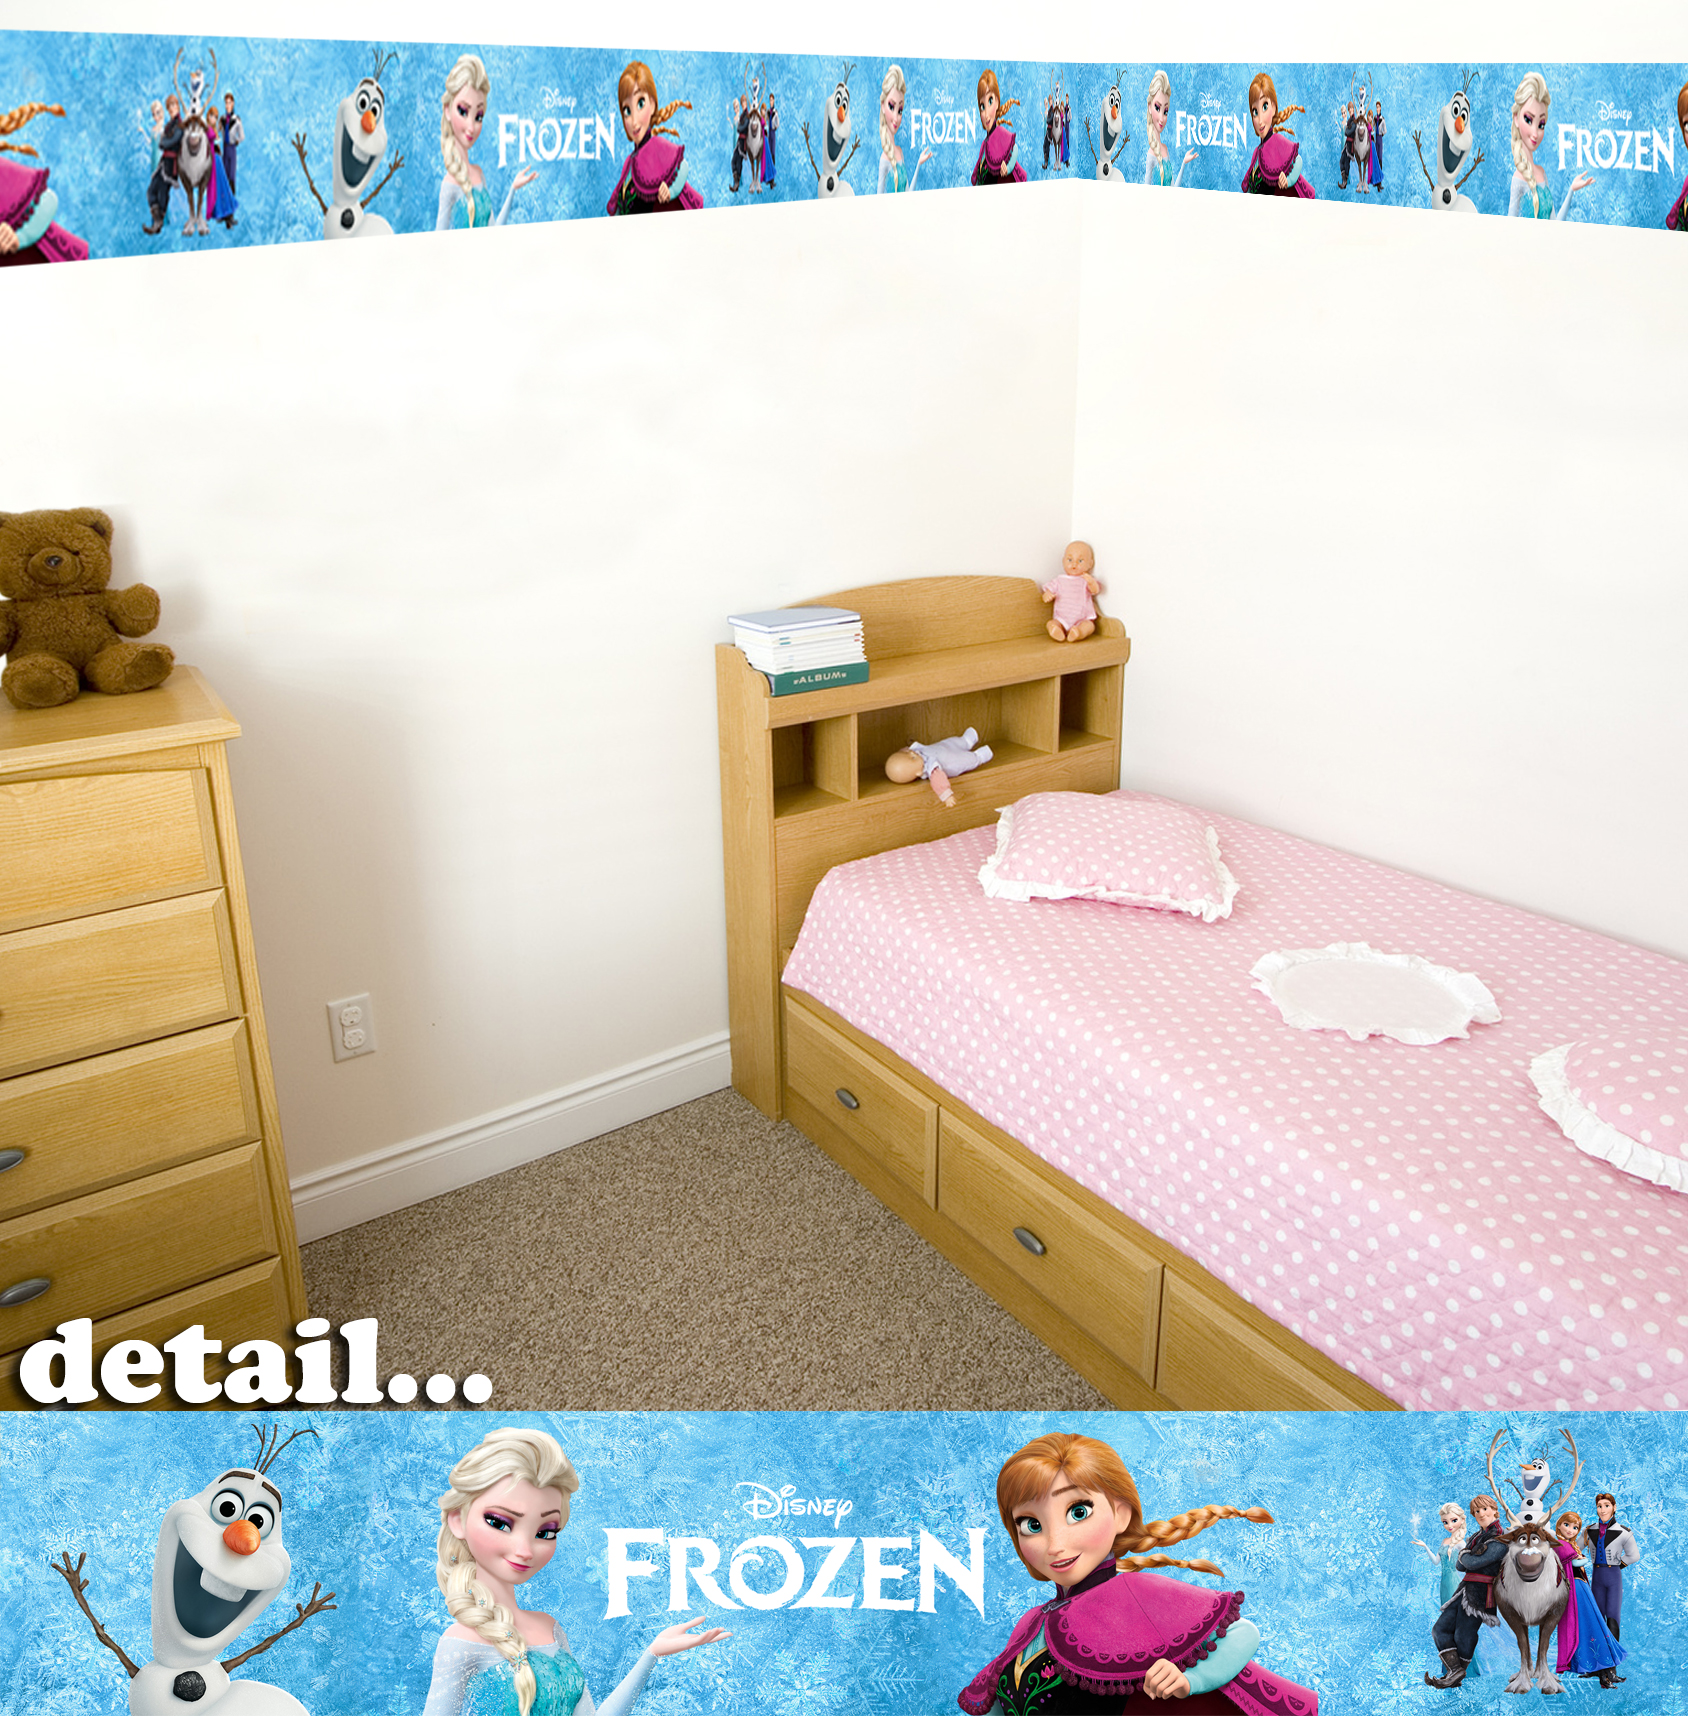 Disney Frozen Self Adhesive Decorative Wall Border   5 metres in total